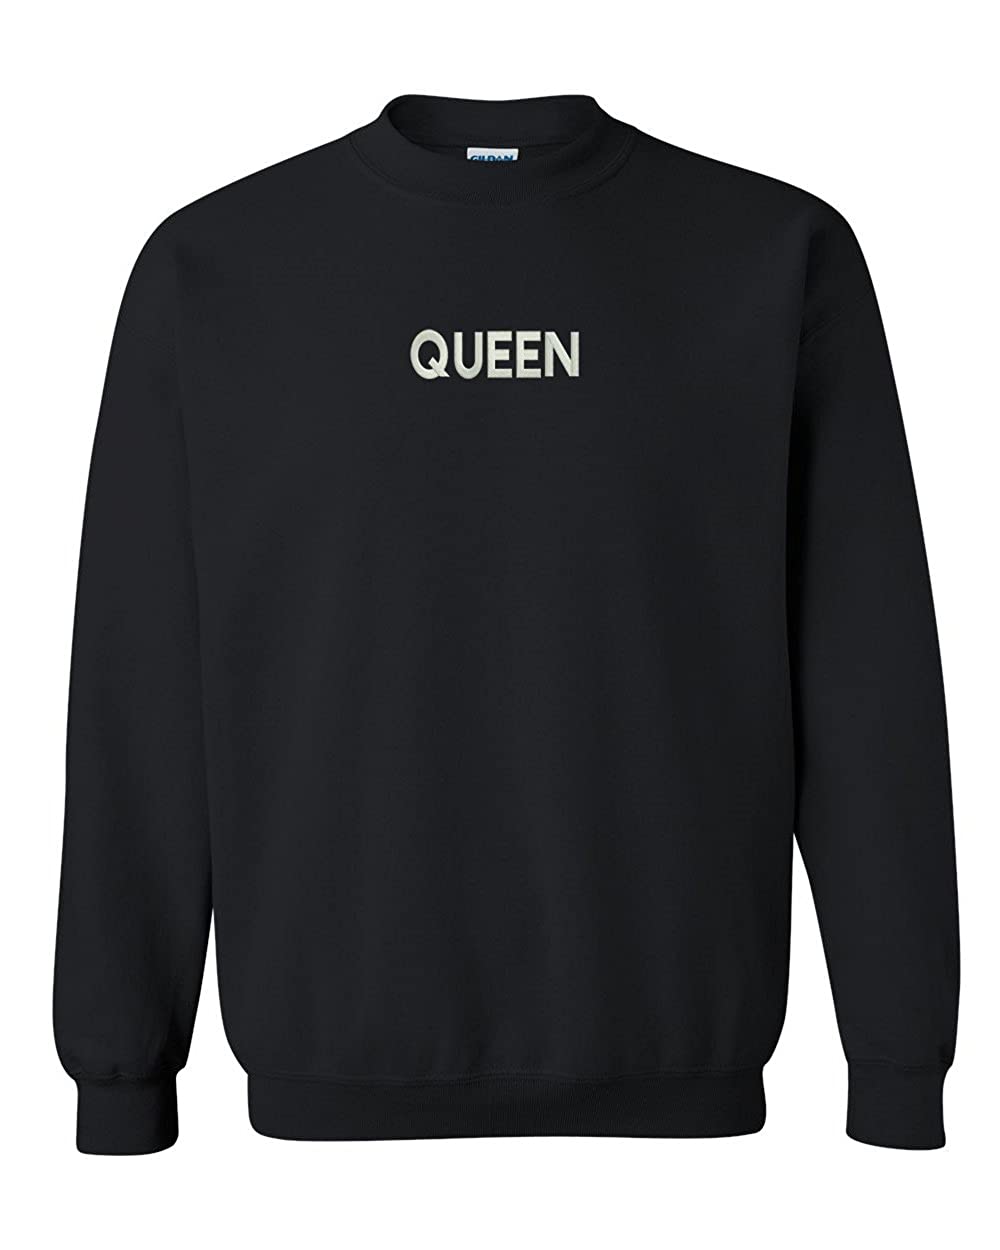 Trendy Apparel Shop Queen Embroidered Crewneck Sweatshirt